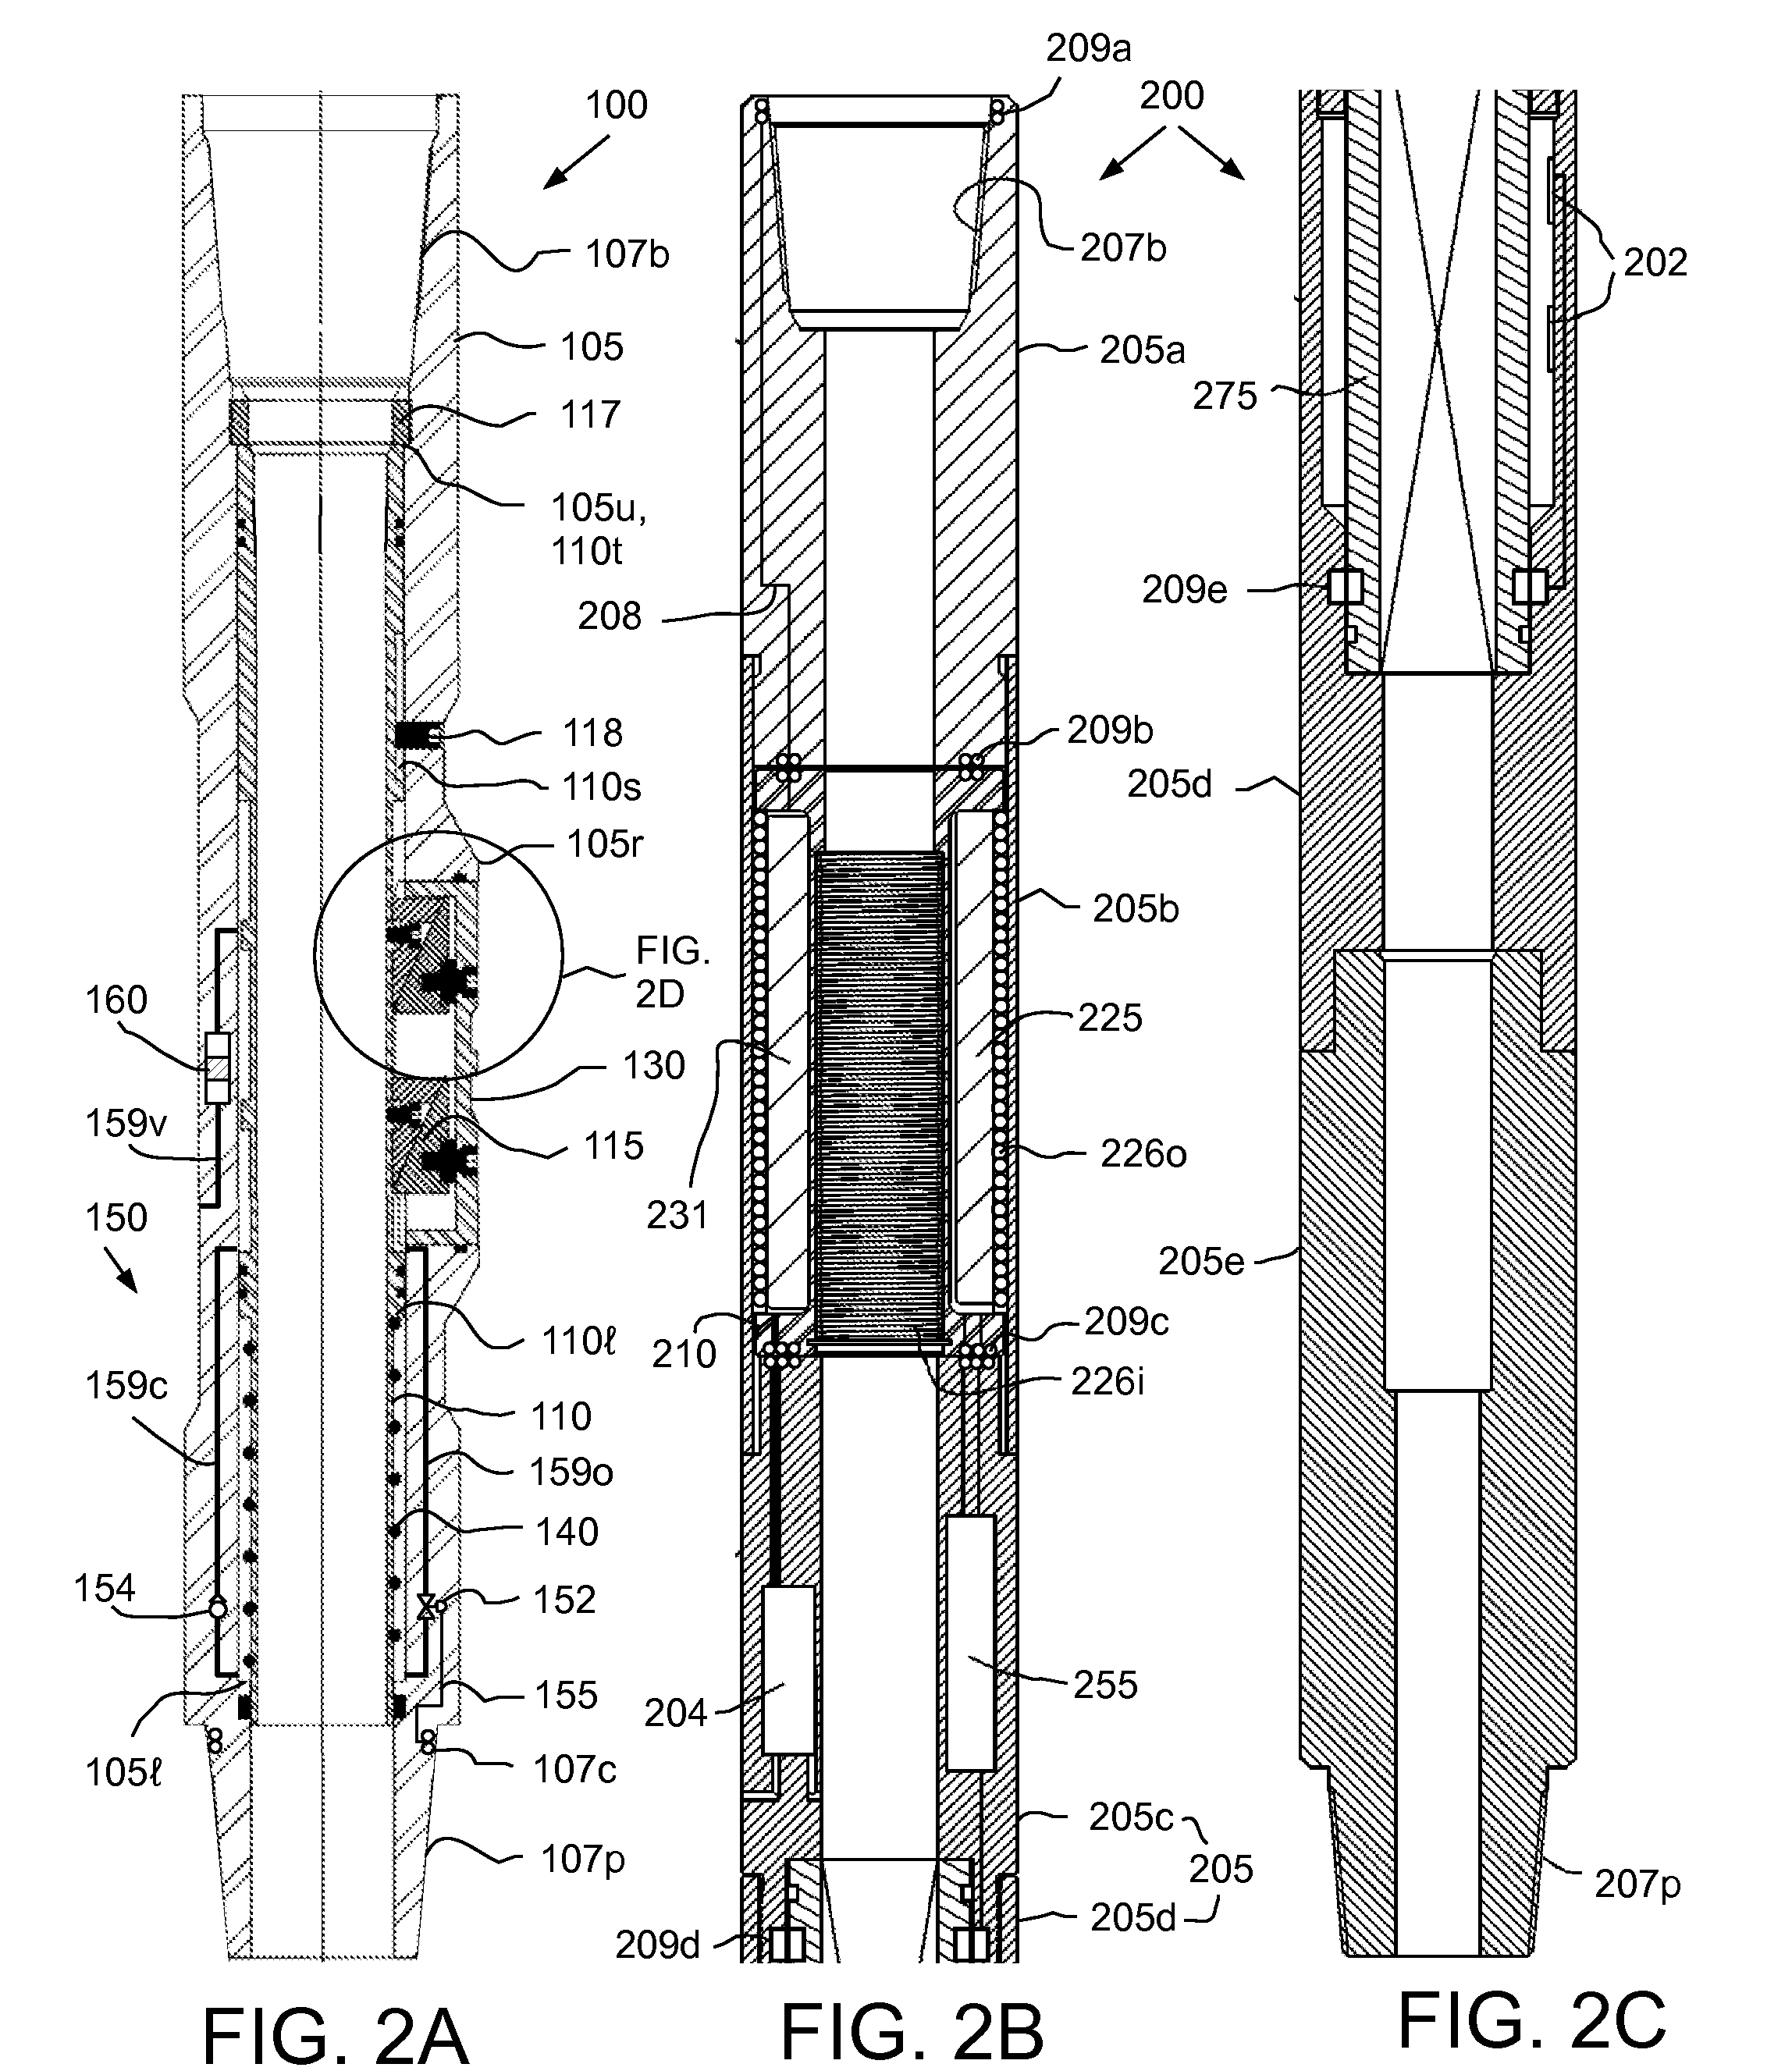 Signal operated isolation valve